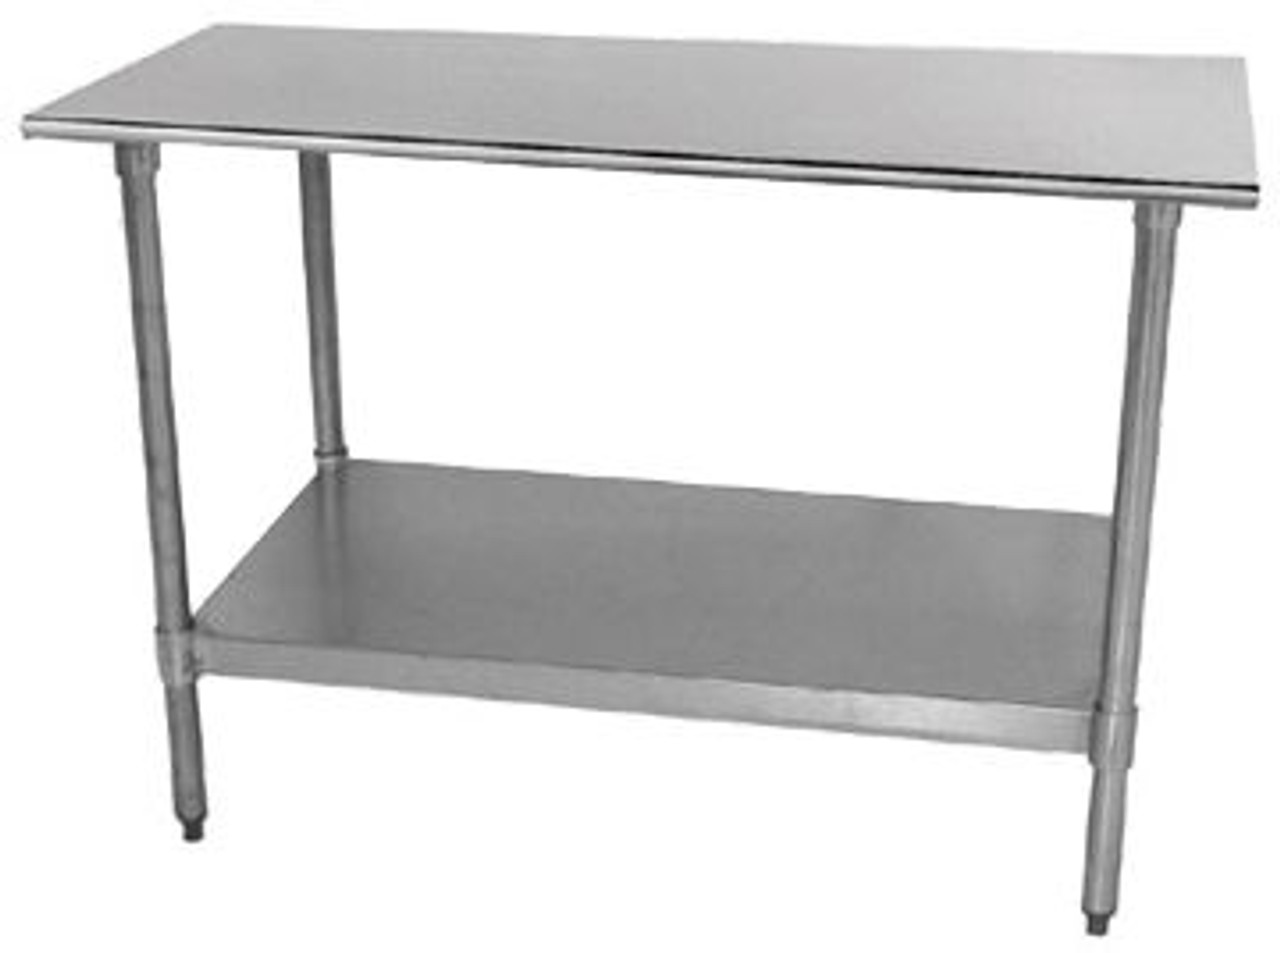 Advance Tabco TT-242-X 24" x 24" Work Table with Galvanized Undershelf